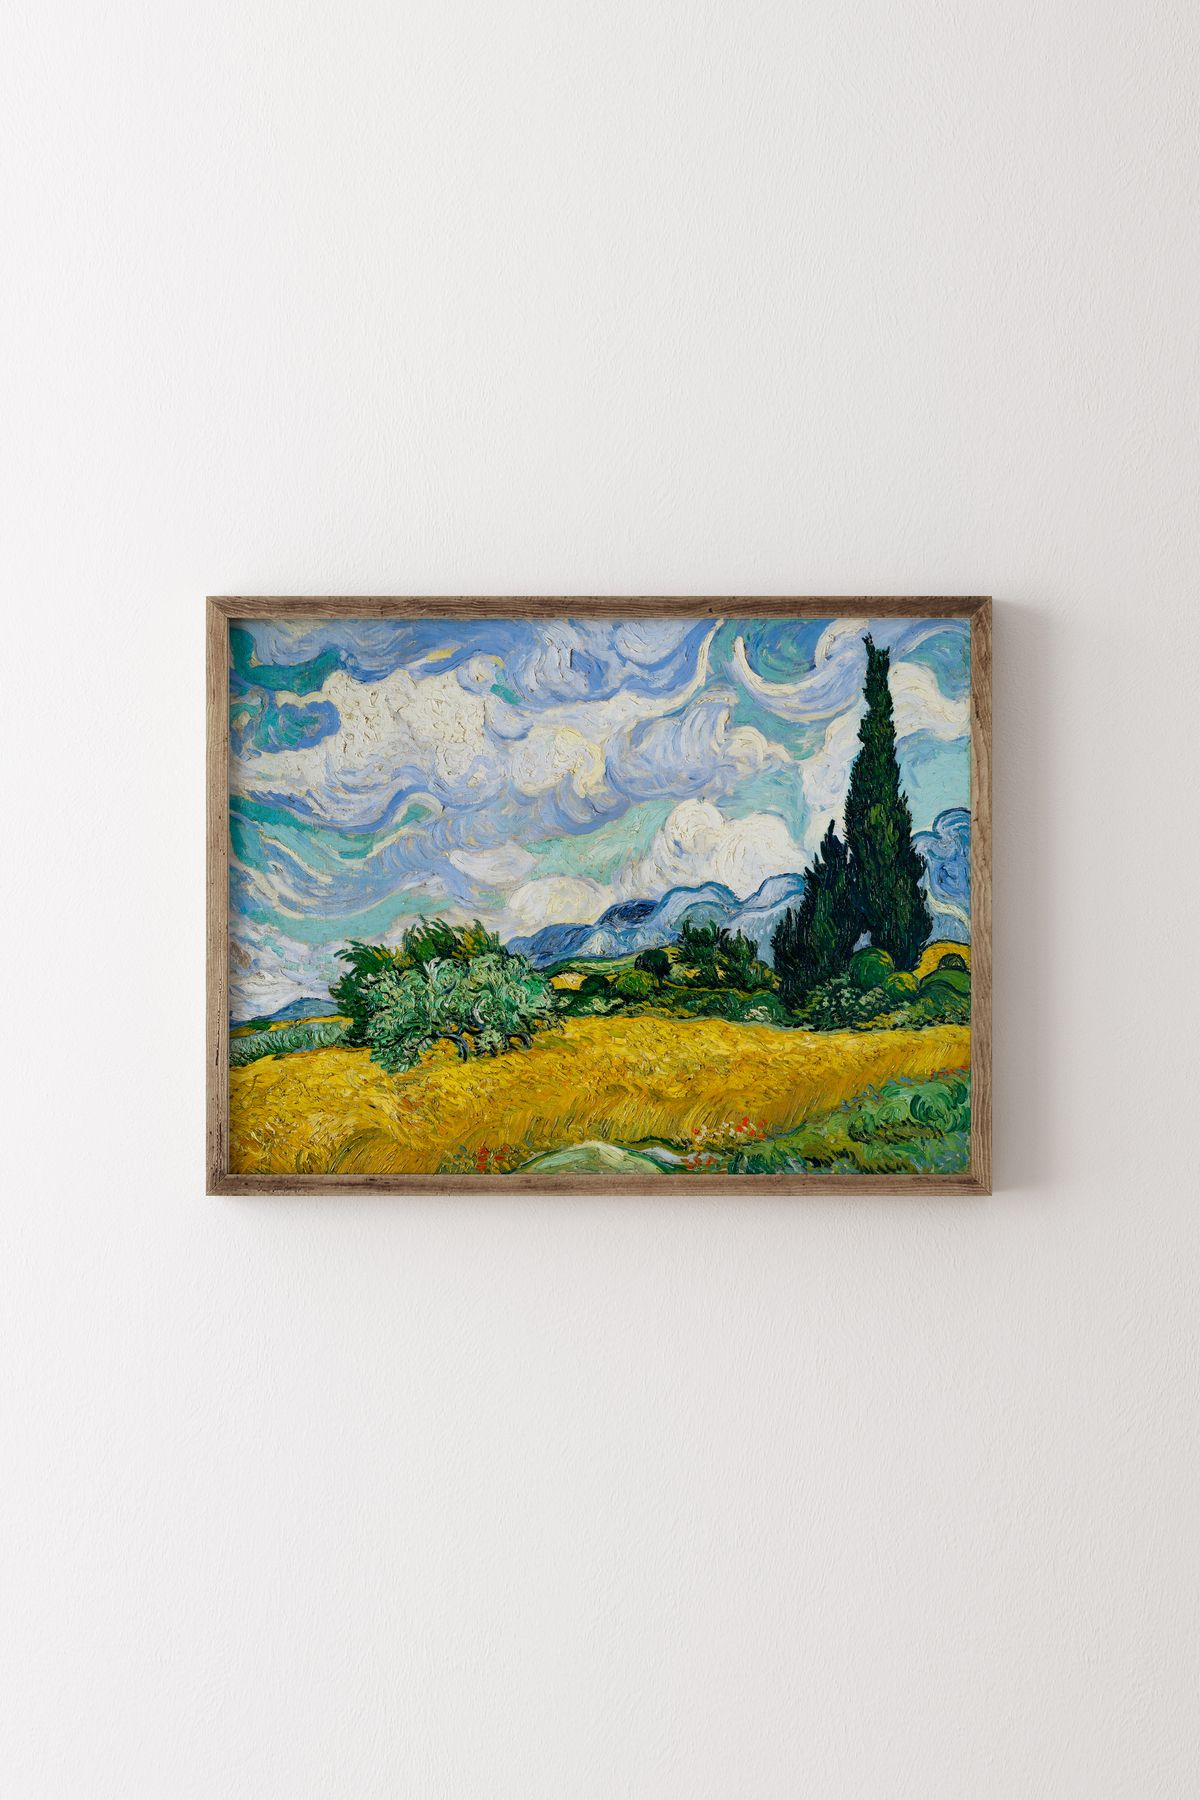 epiqart Selvili Buğday Tarlası - Vincent Van Gogh - Ahşap Çerçeve